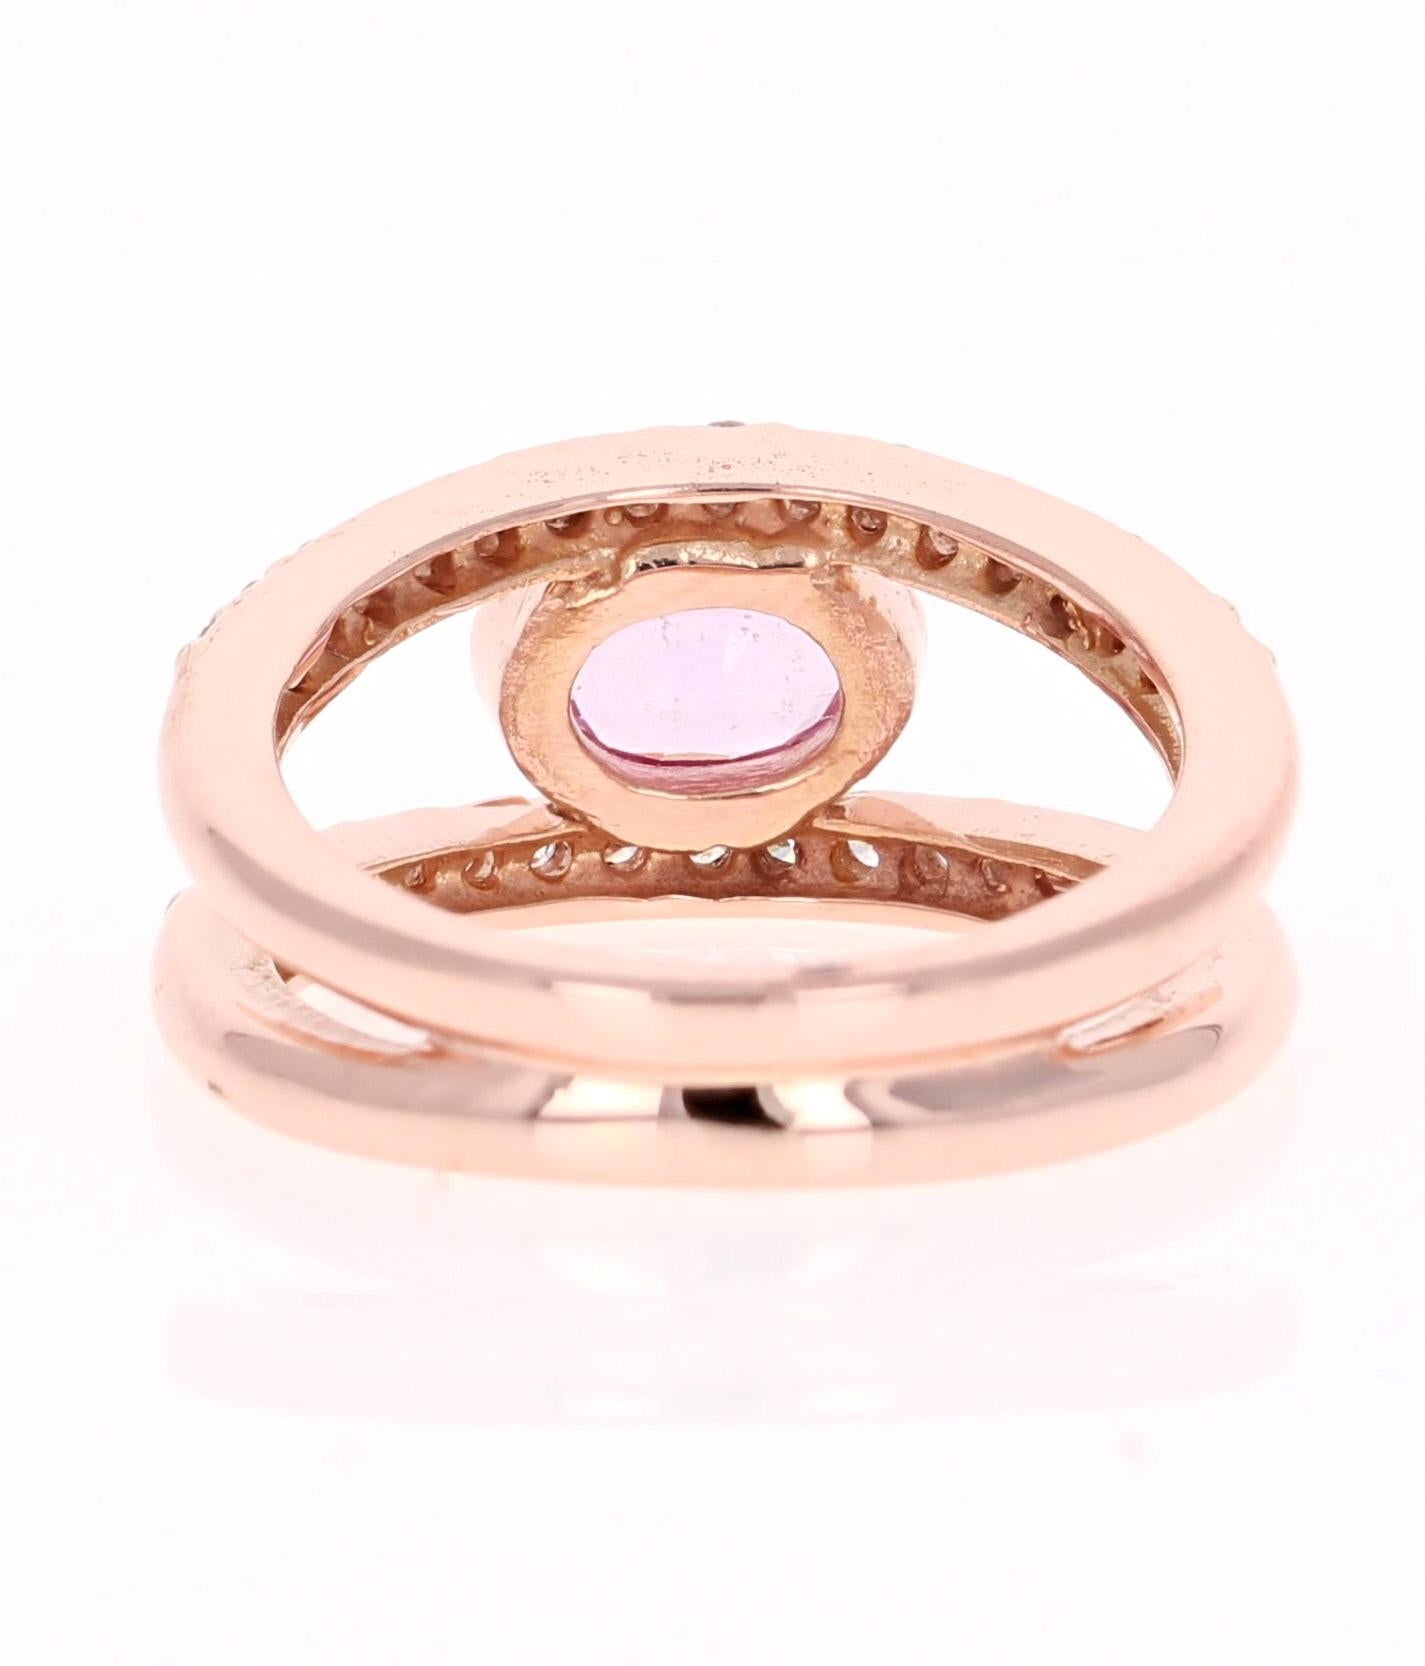 Oval Cut 1.48 Carat Pink Sapphire Diamond 14 Karat Rose Gold Ring